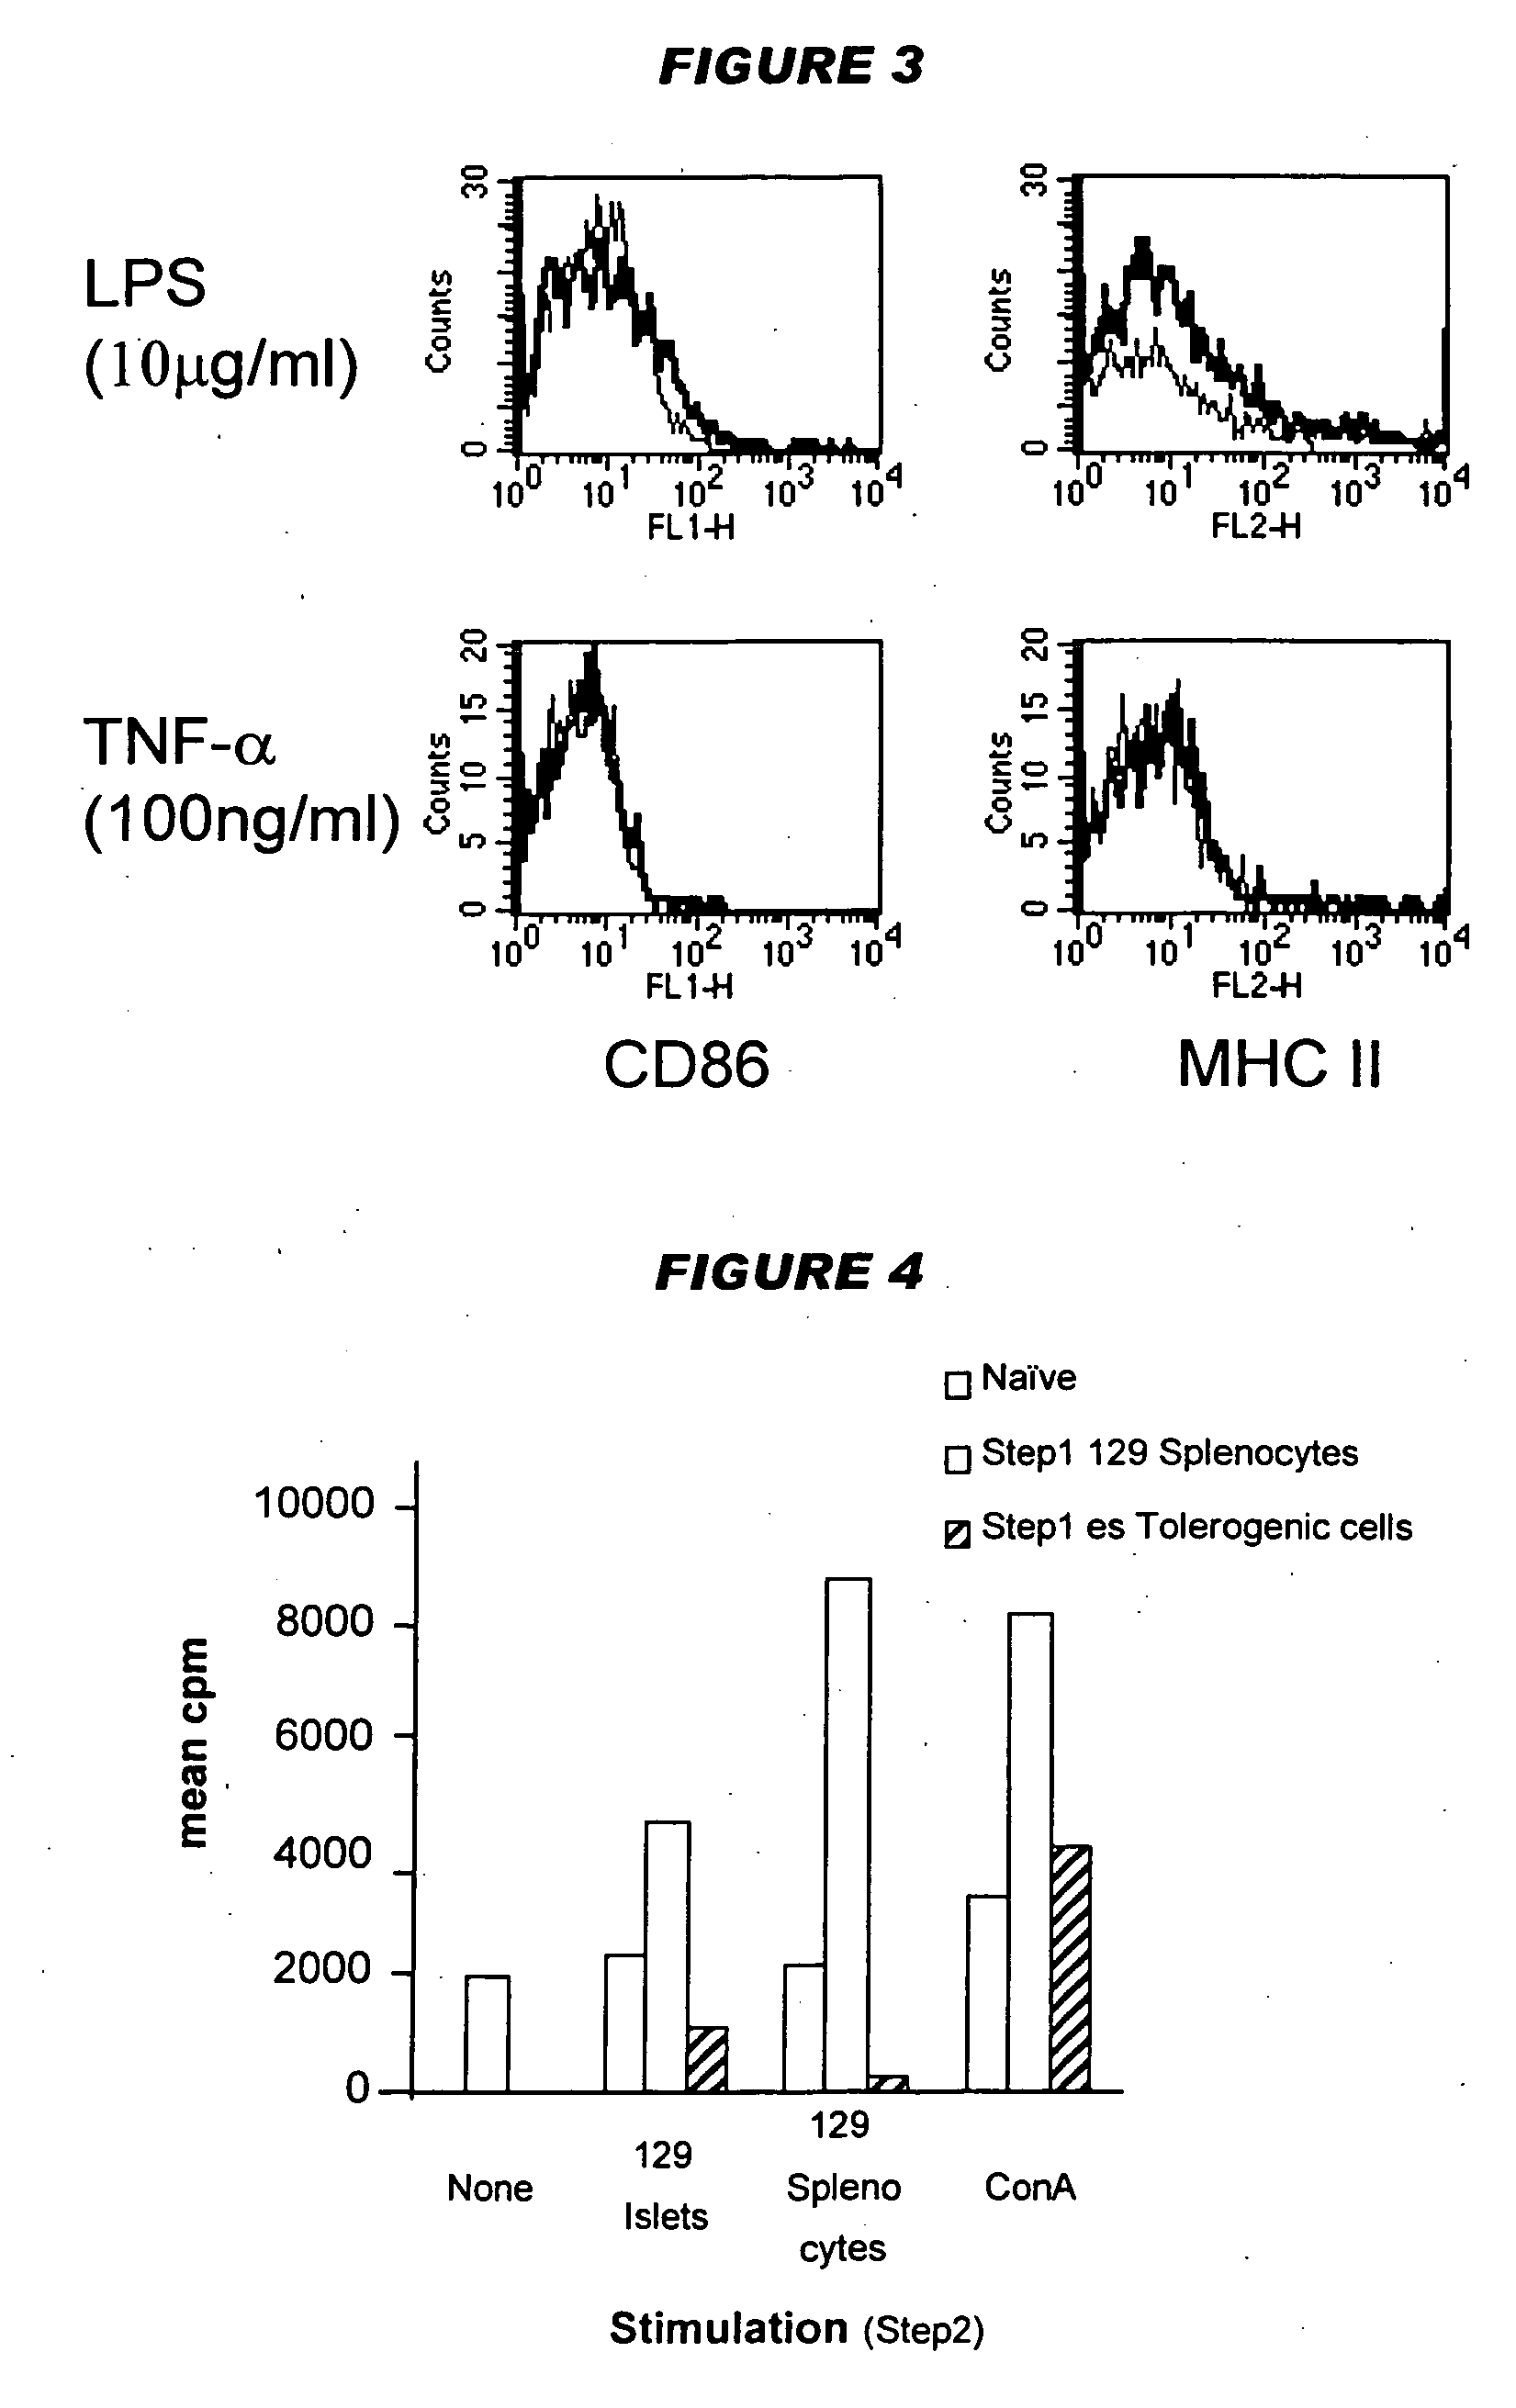 Tolerogenic antigen-presenting cells